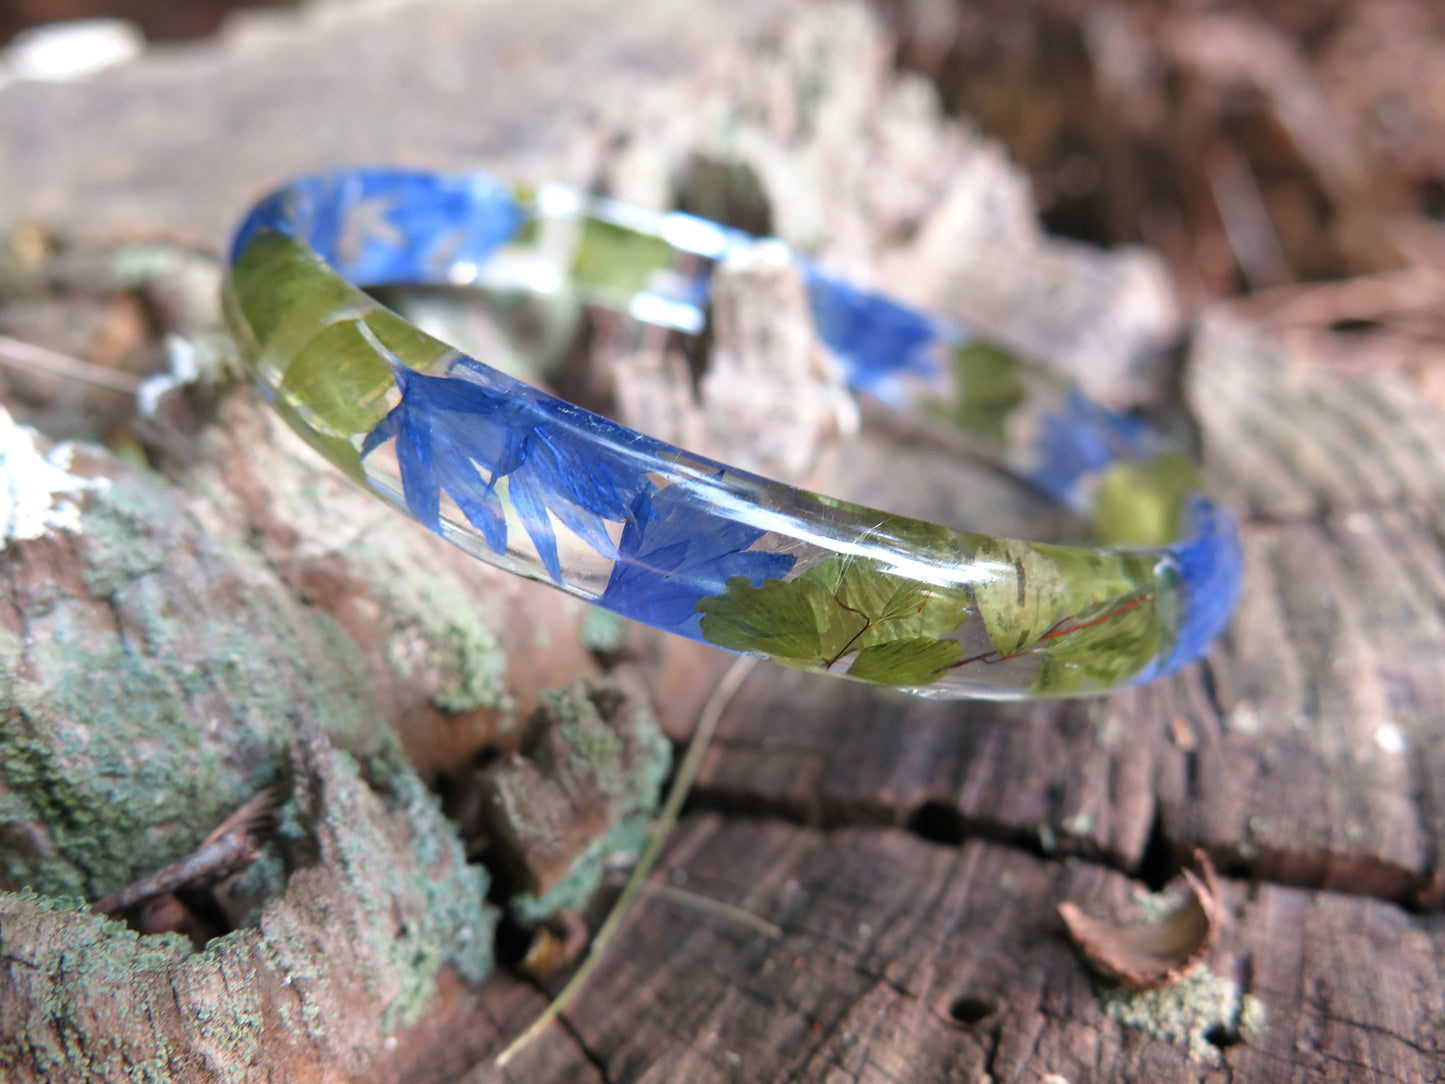 Handmade thin blue cornflower bracelet